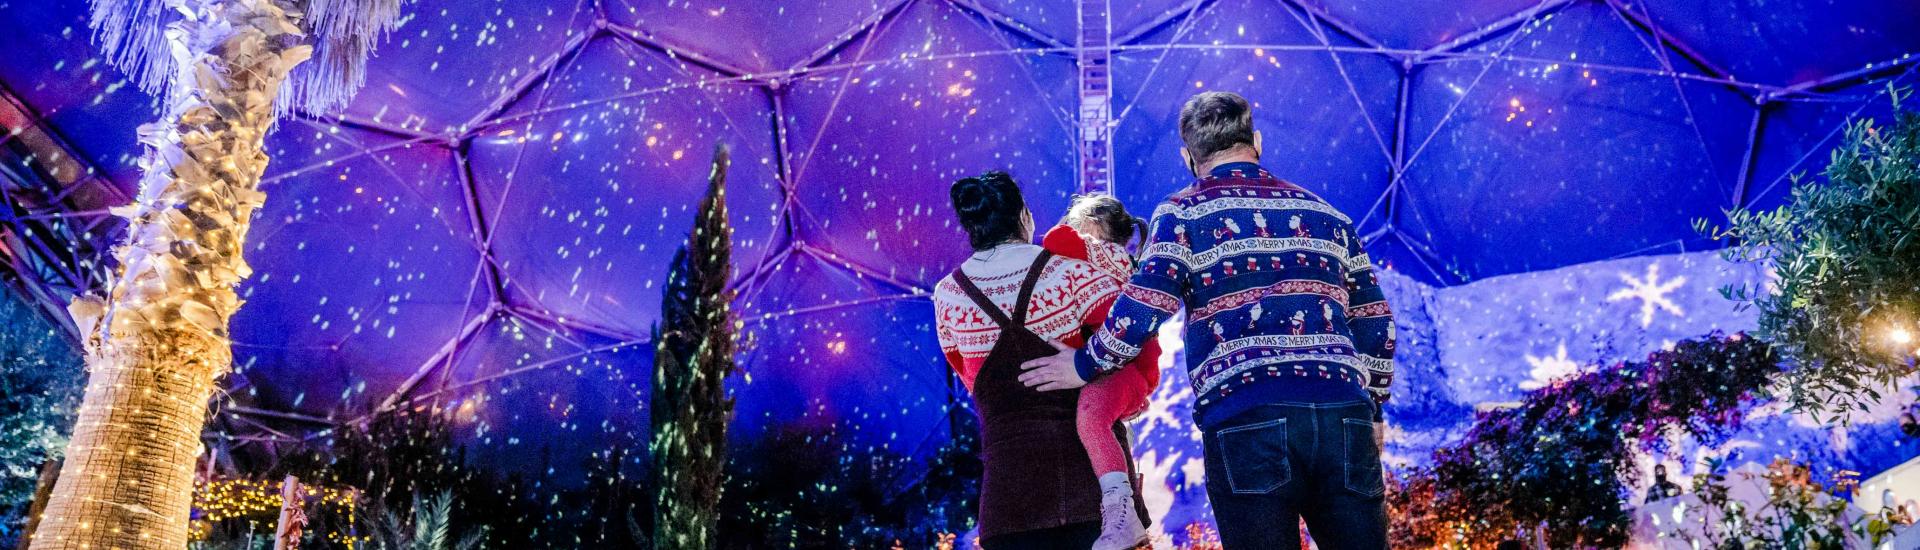 Family enjoying Christmas lights in the Mediterranean Biome